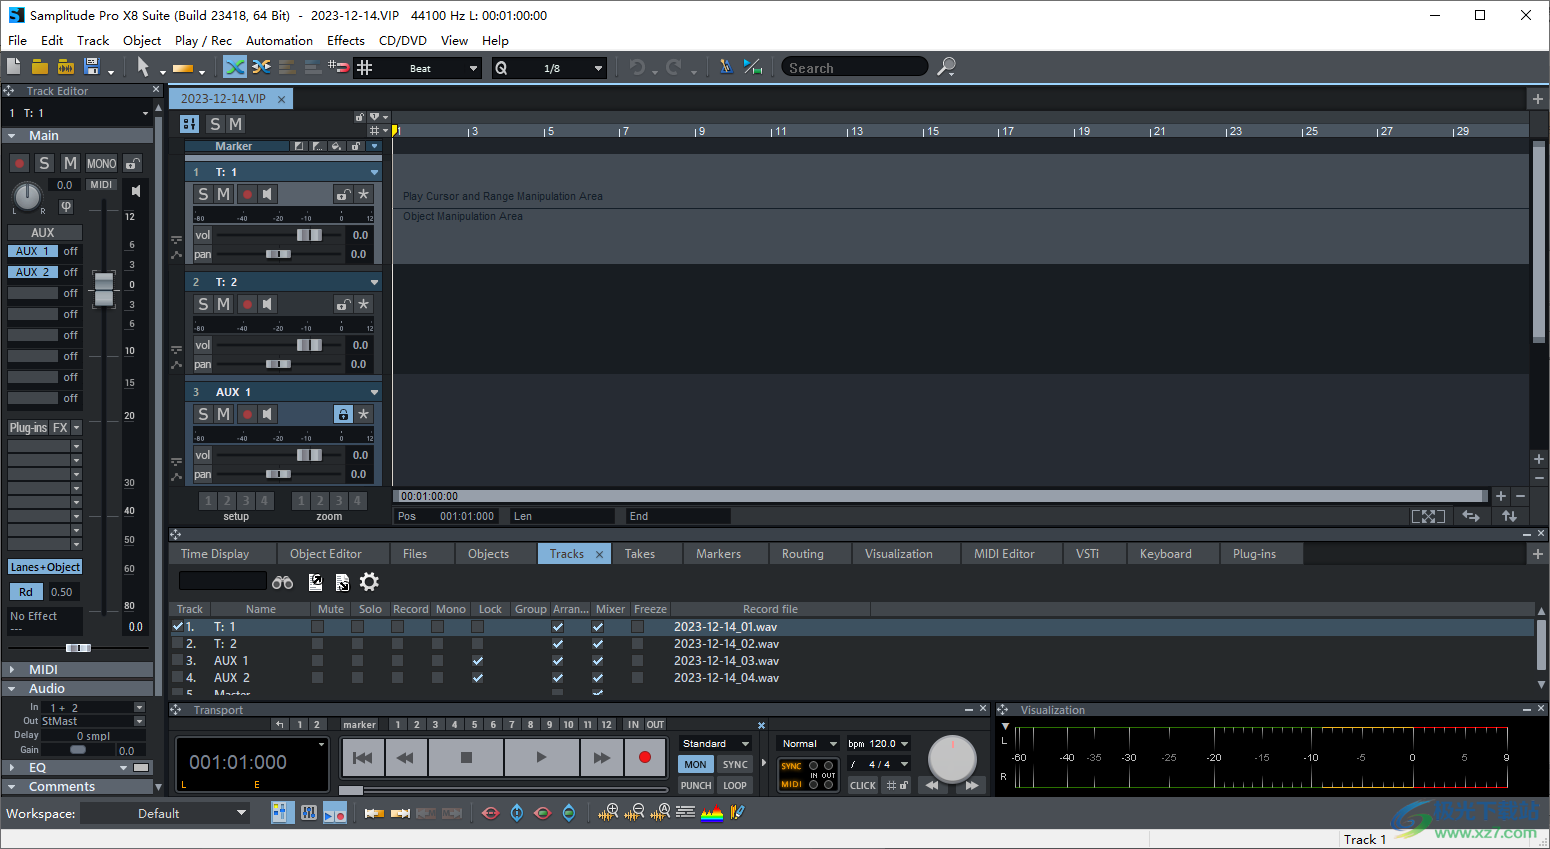 MAGIX Samplitude Pro X8 Suite(录音软件)